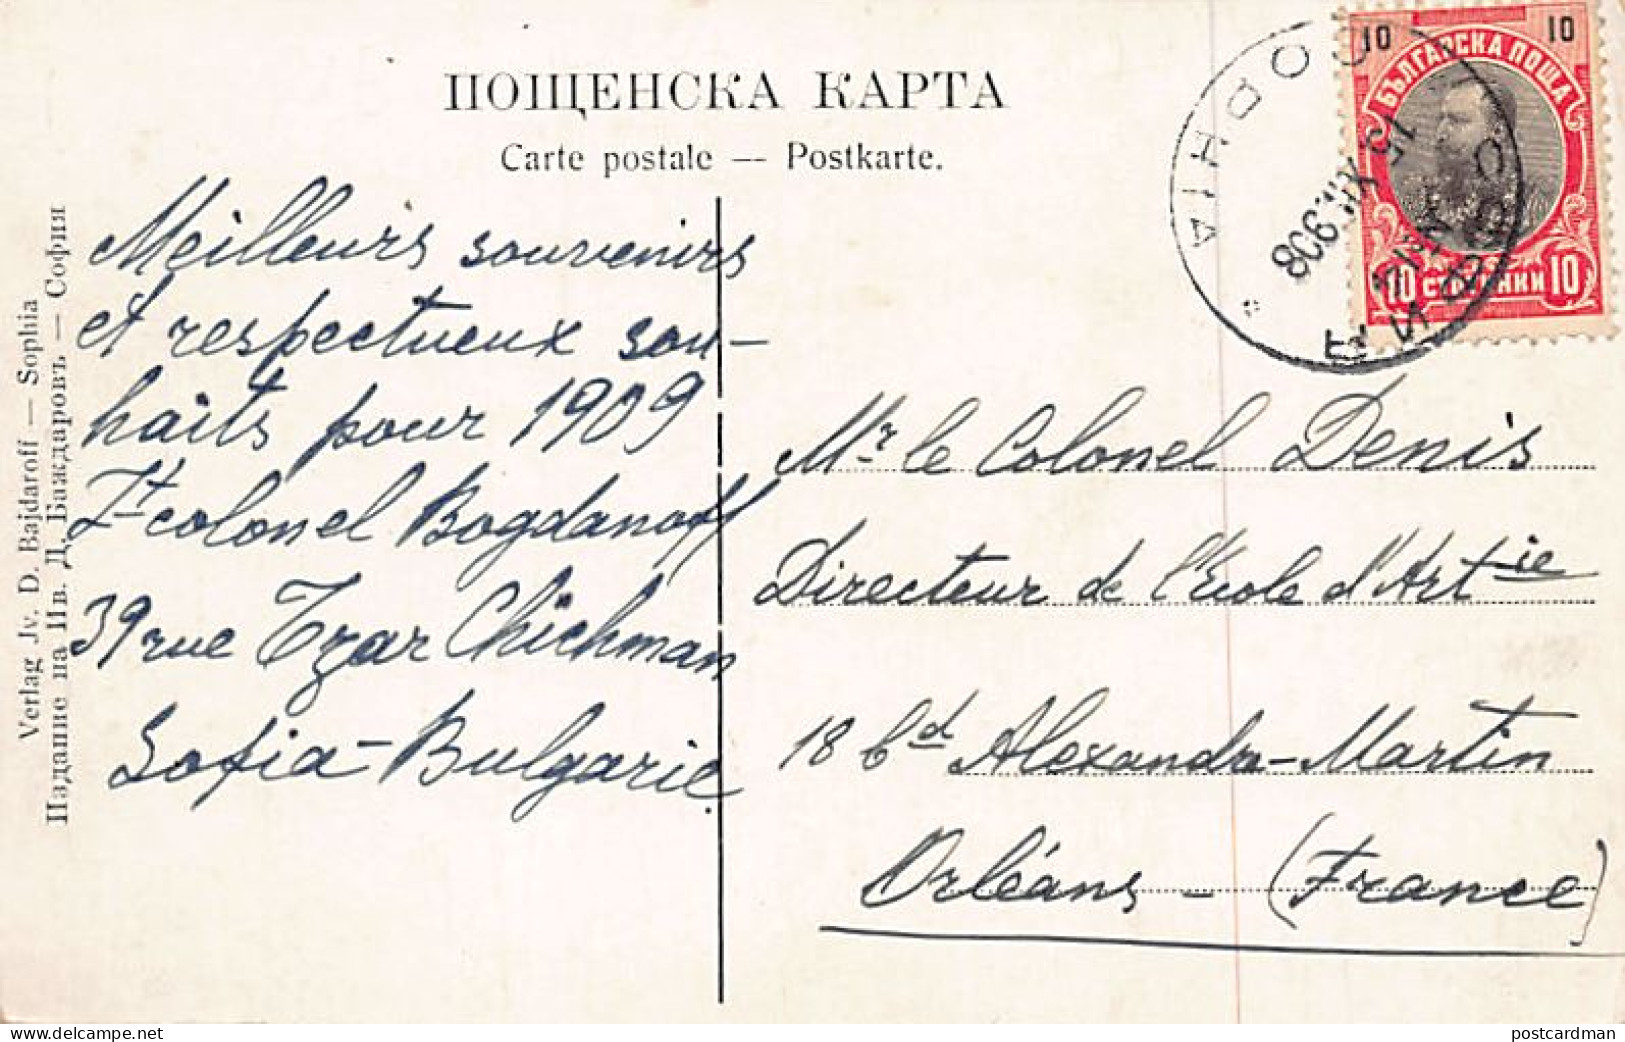 Bulgaria - SOFIA - Celebration On 30th August 1907 - Bulgarien